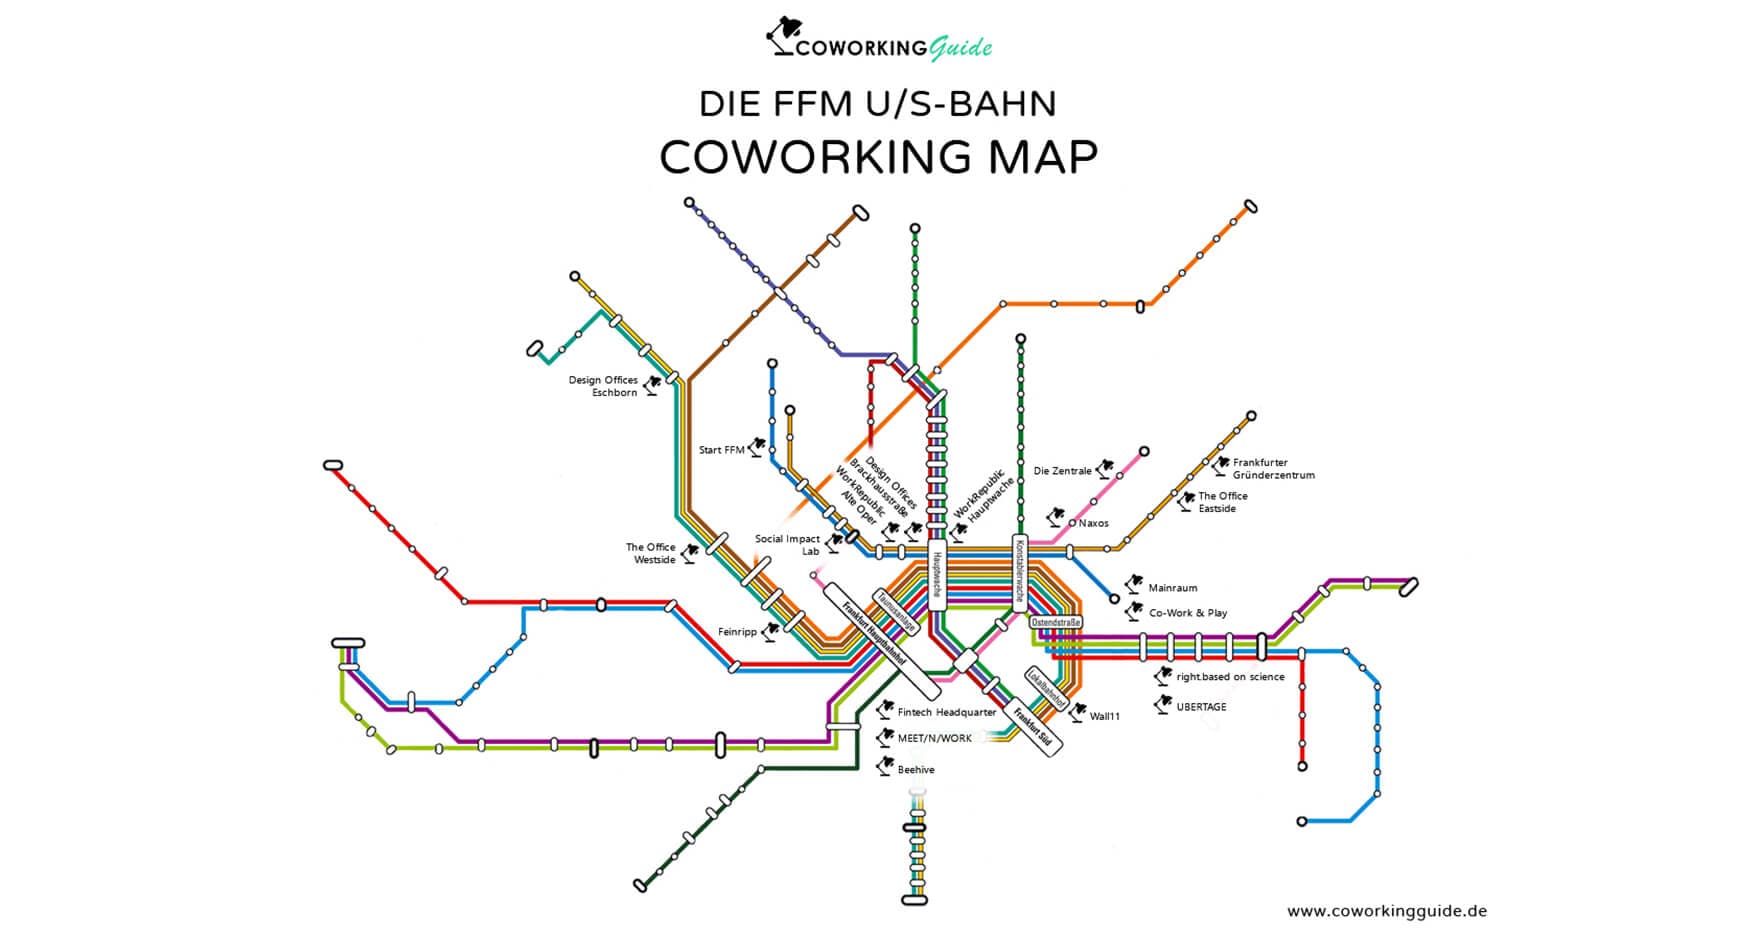 CoworkingGuide Coworking Ubahnkarte Frankfurt